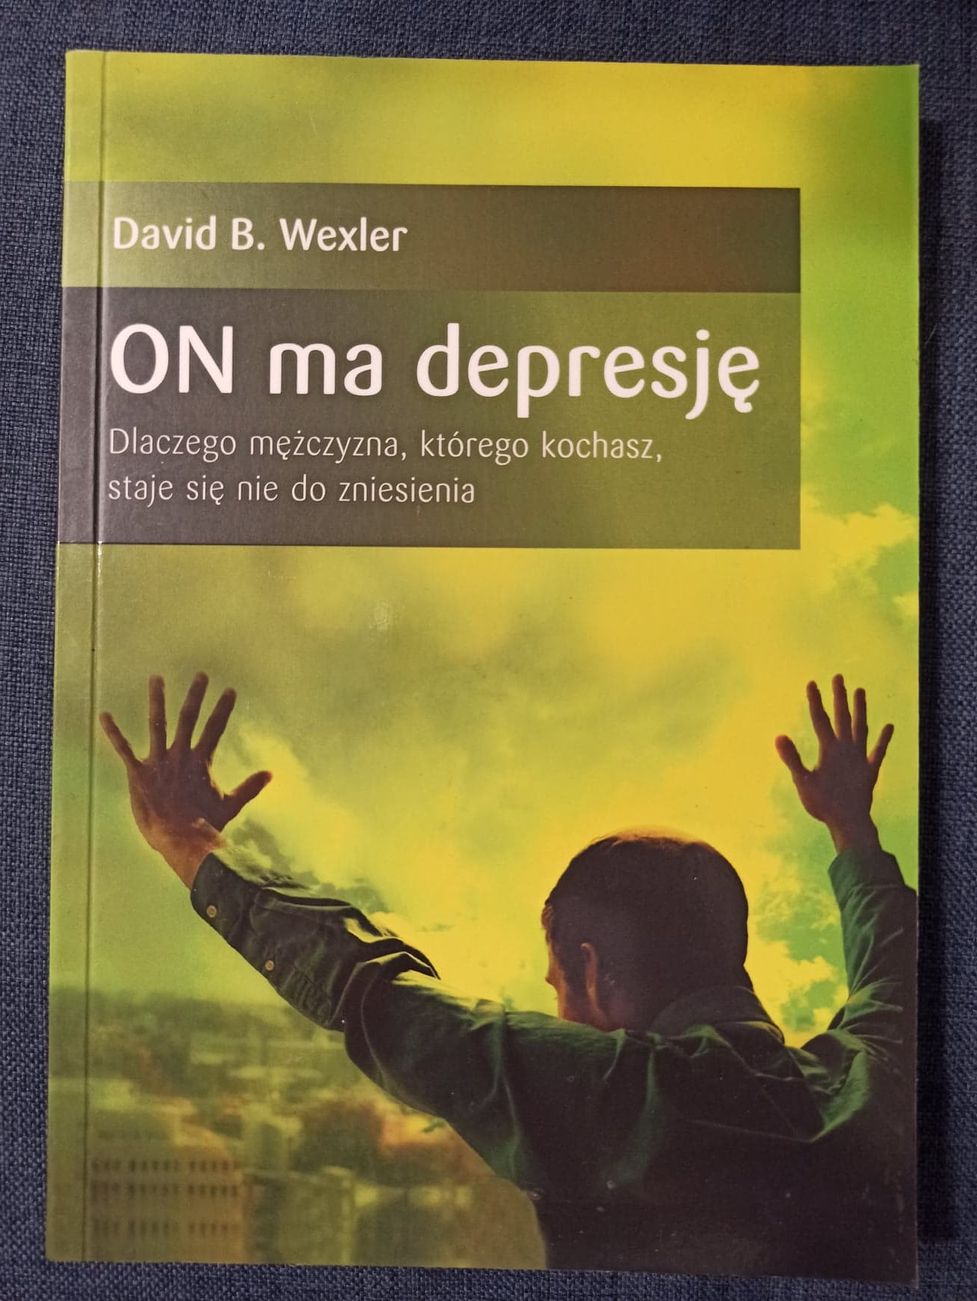 "ON ma depresję" David B. Wexler